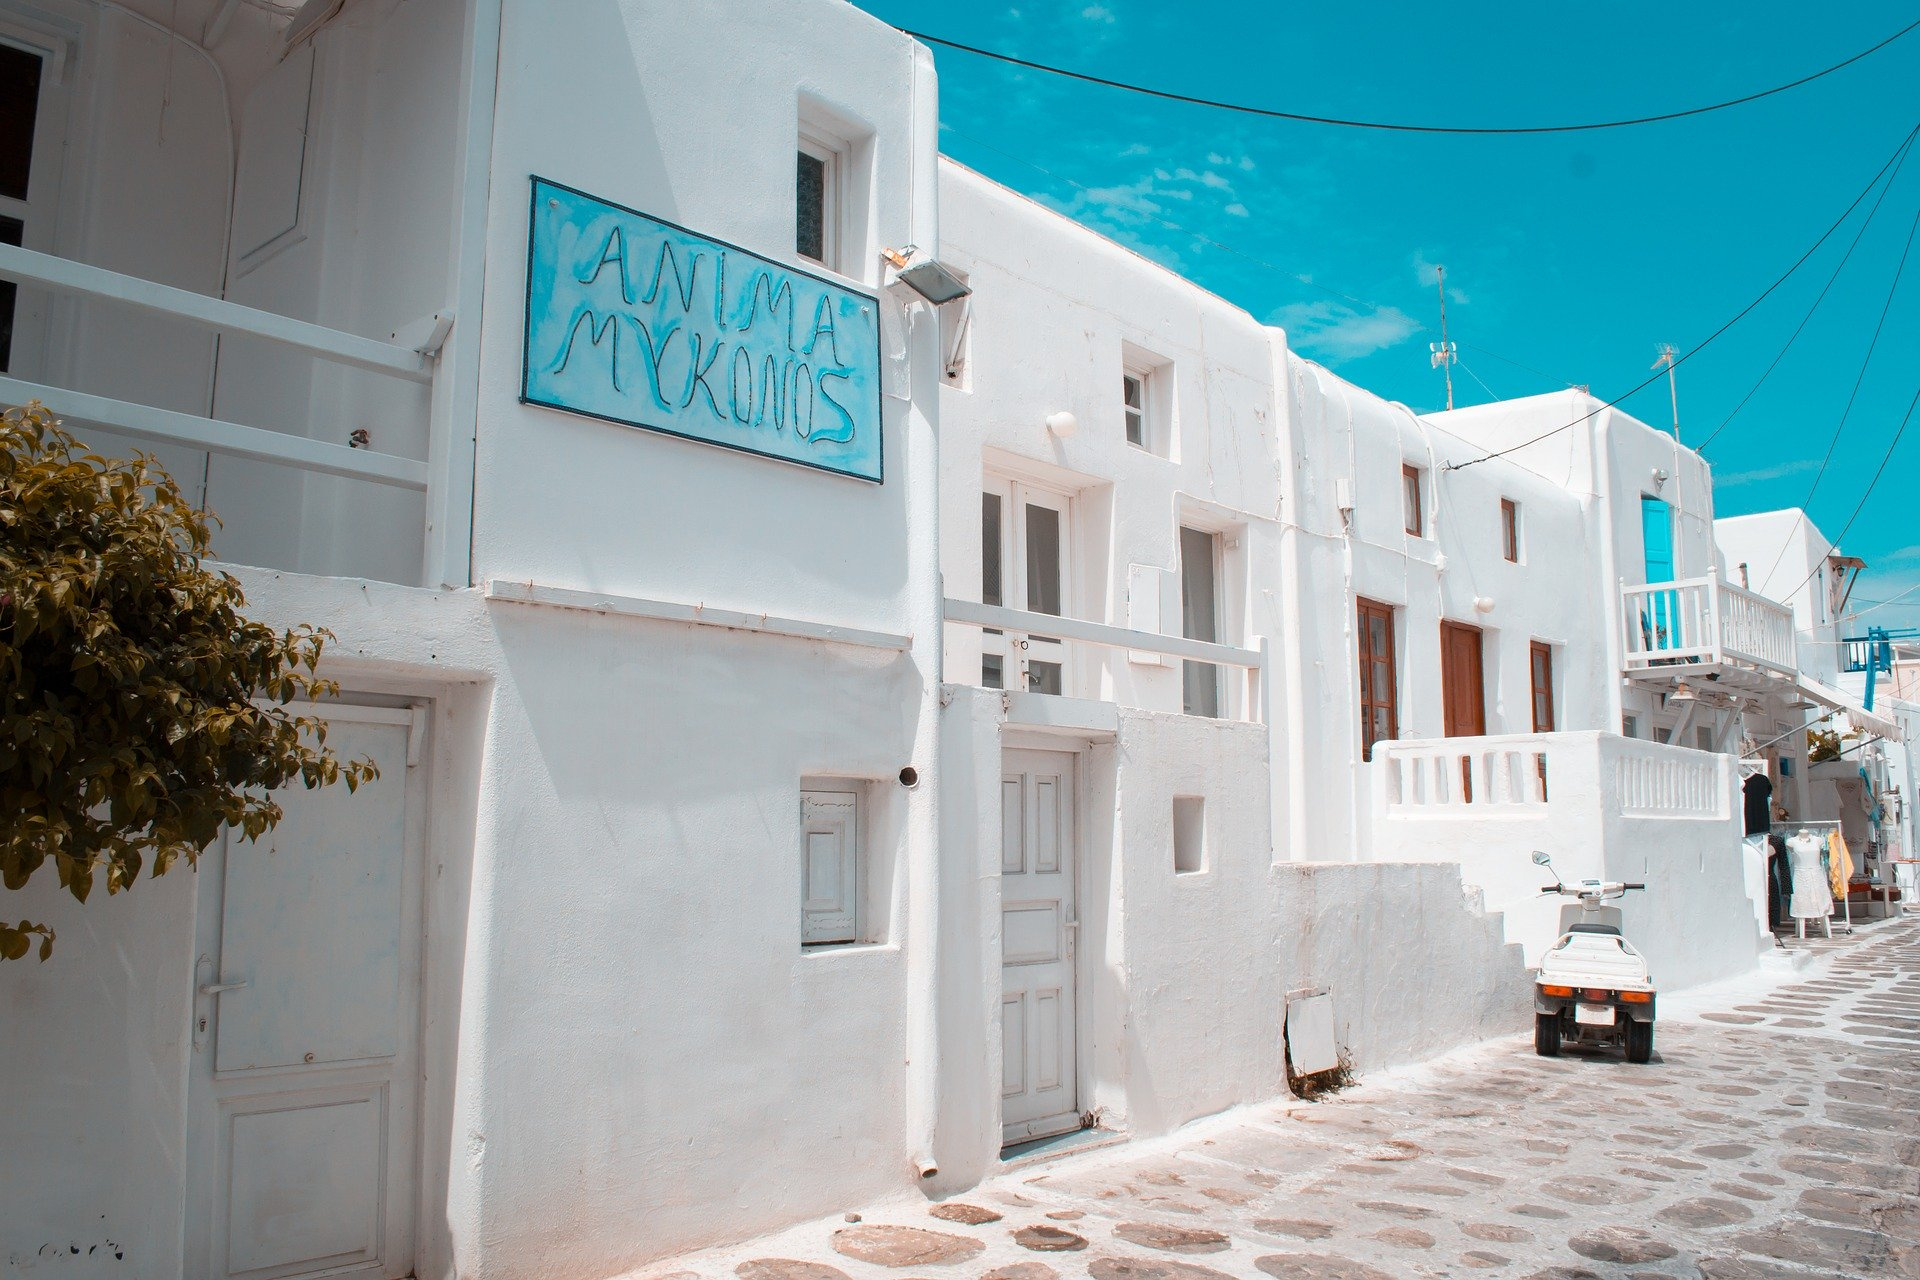 White buildings along a street, tan stone pavement. Blue sky, blue sign reading "Anima Mykonos"